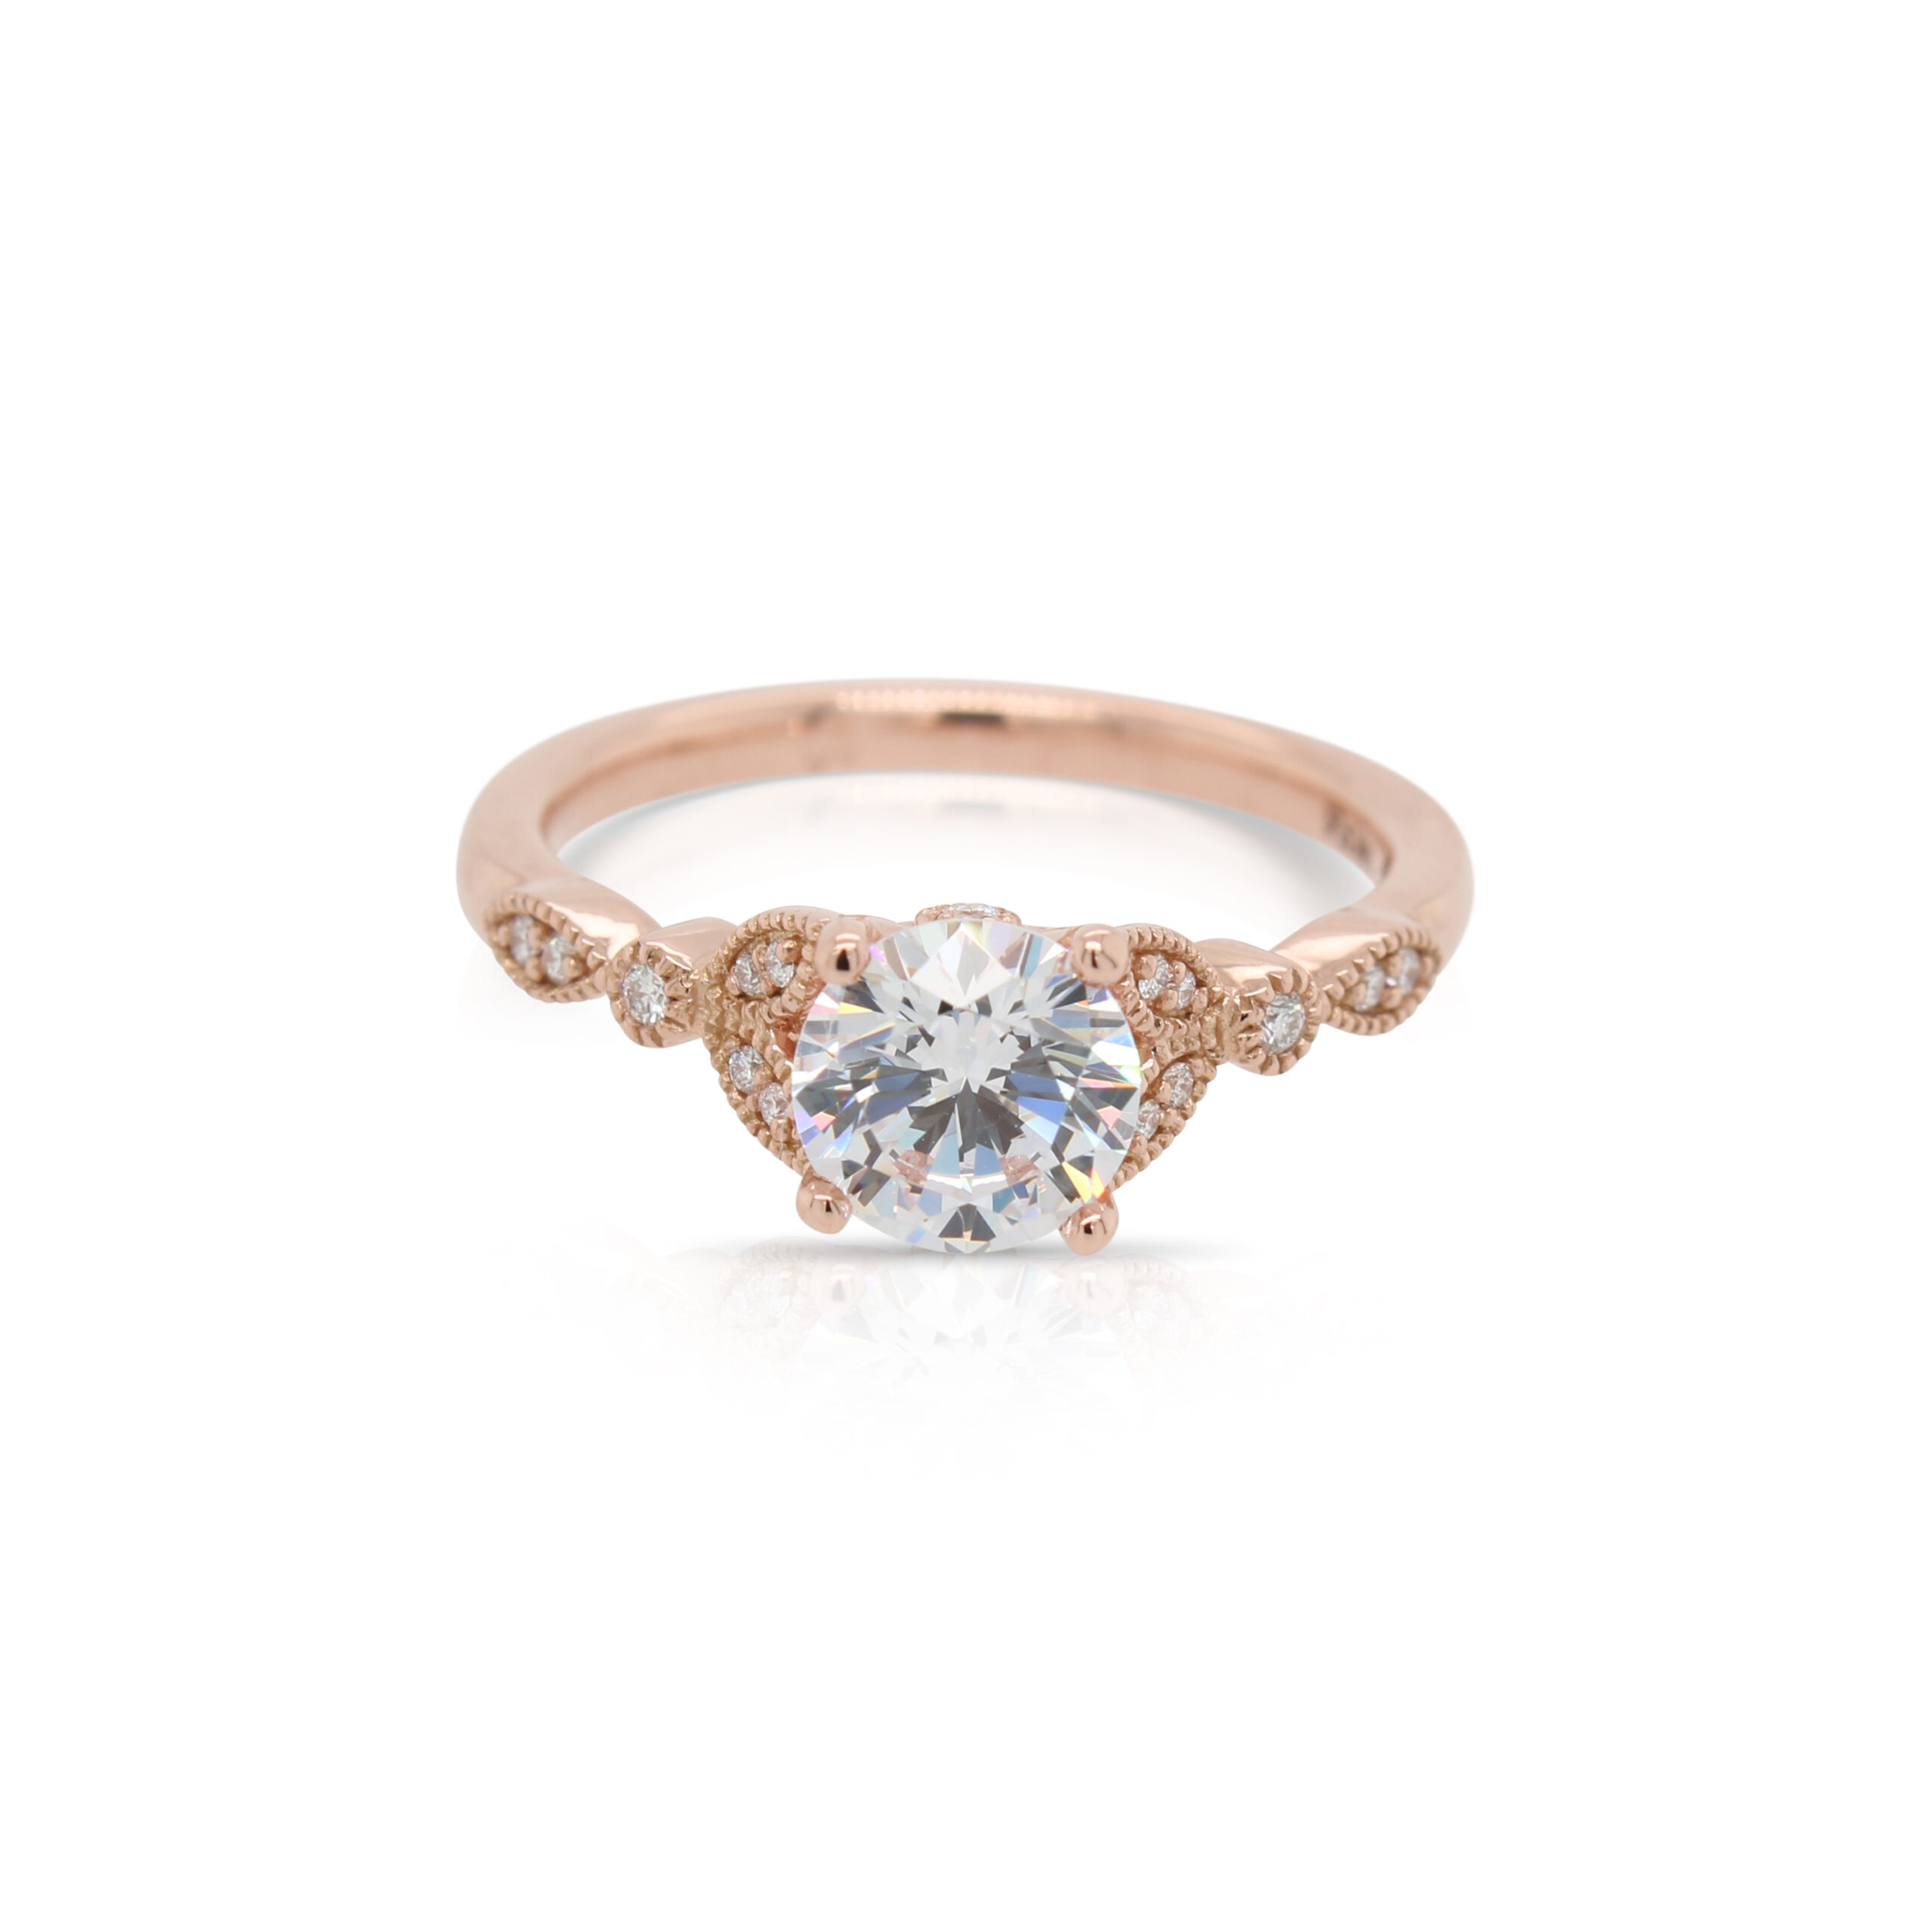 393065Complete-Love-Engagement-Ring.jpg